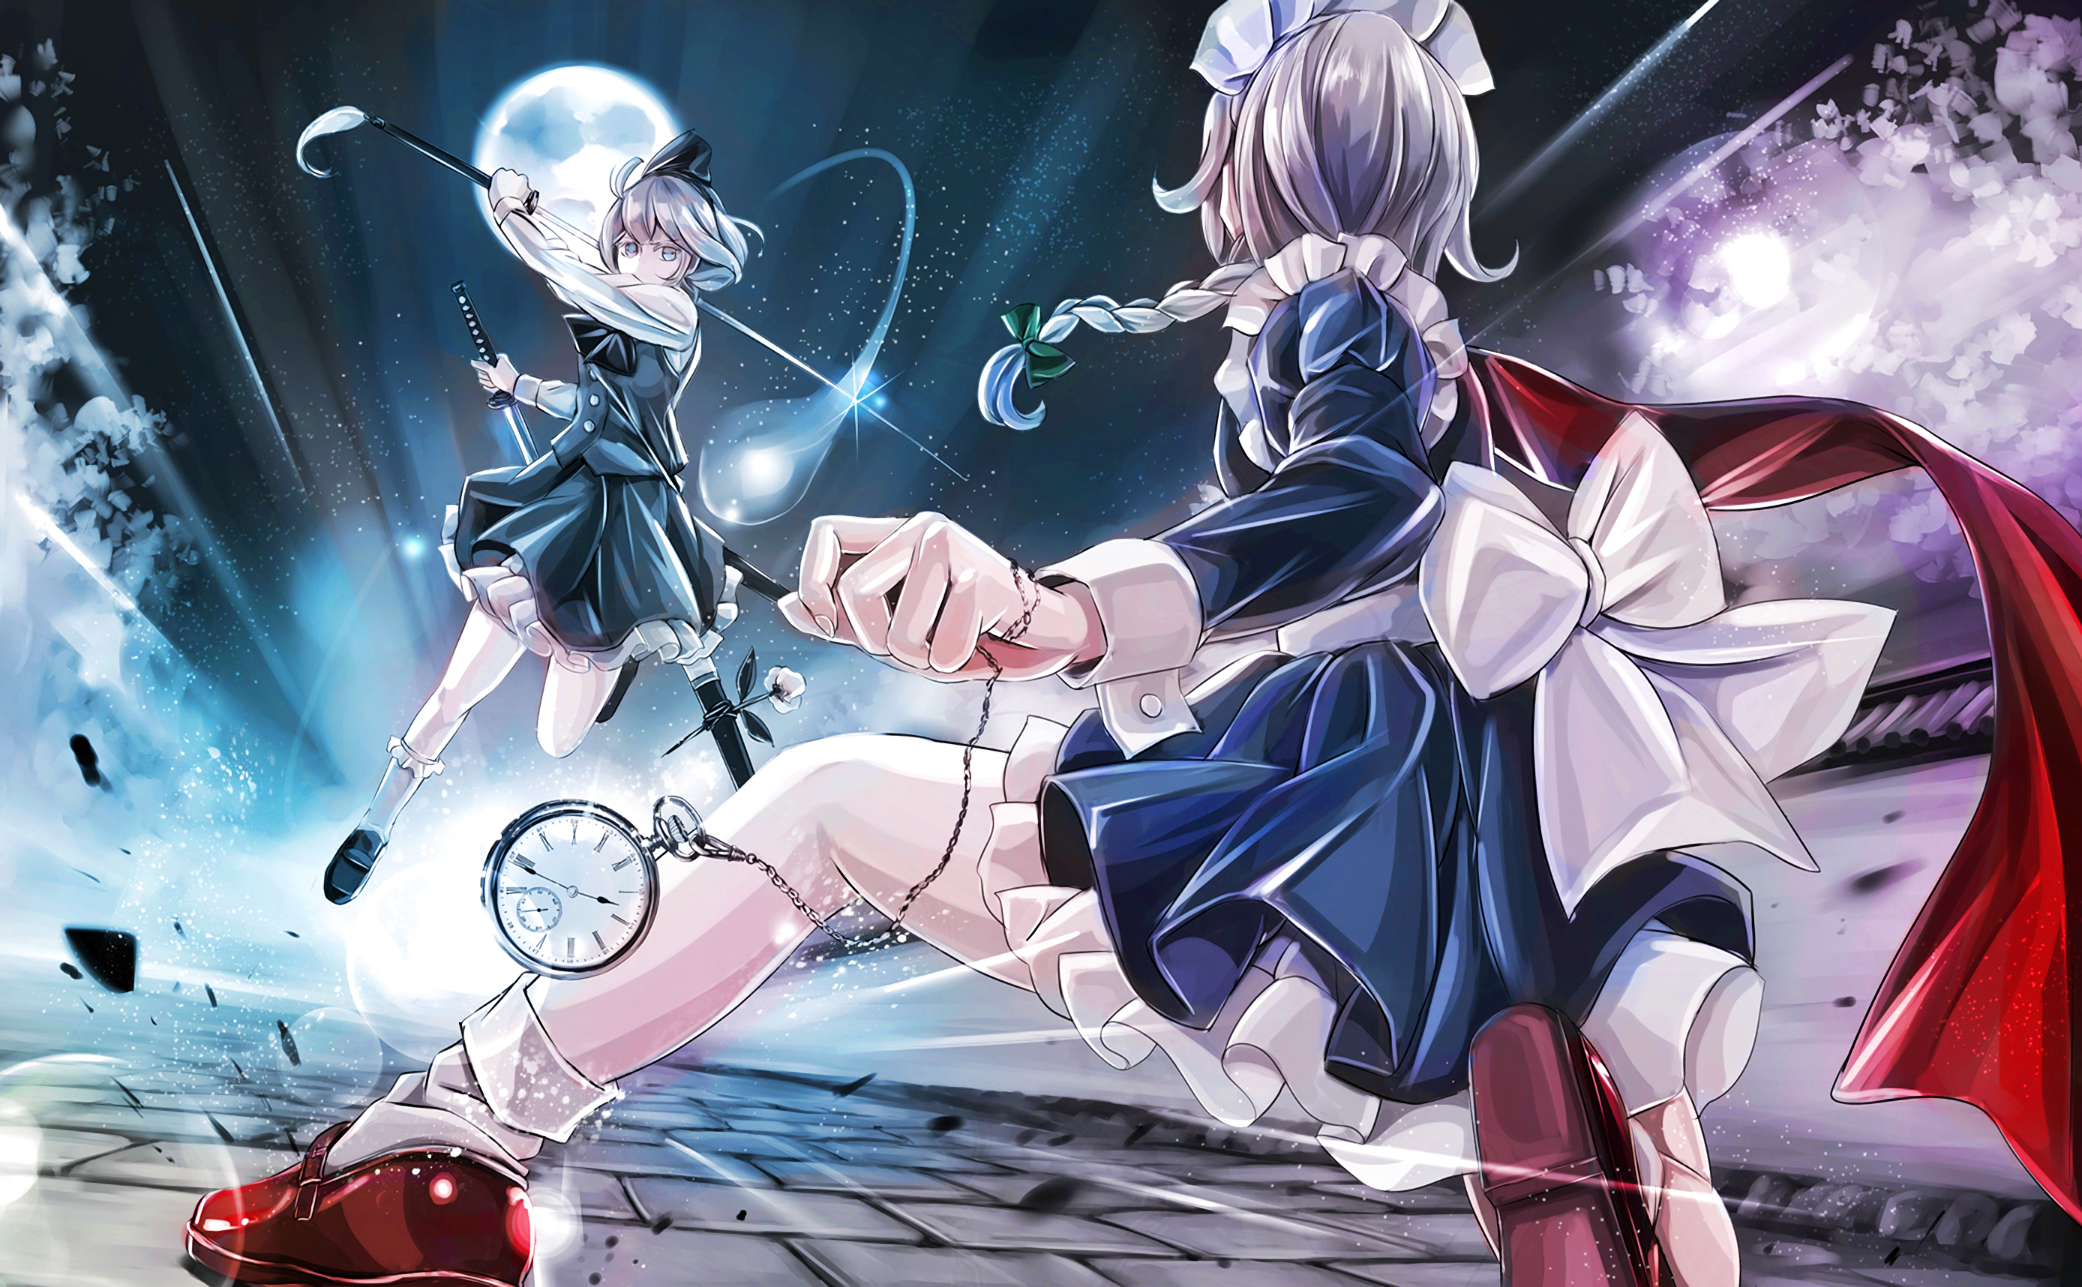 Anime 2082x1287 manga anime anime girls Moon legs clocks weapon Touhou two women fantasy art fantasy girl women with swords sword